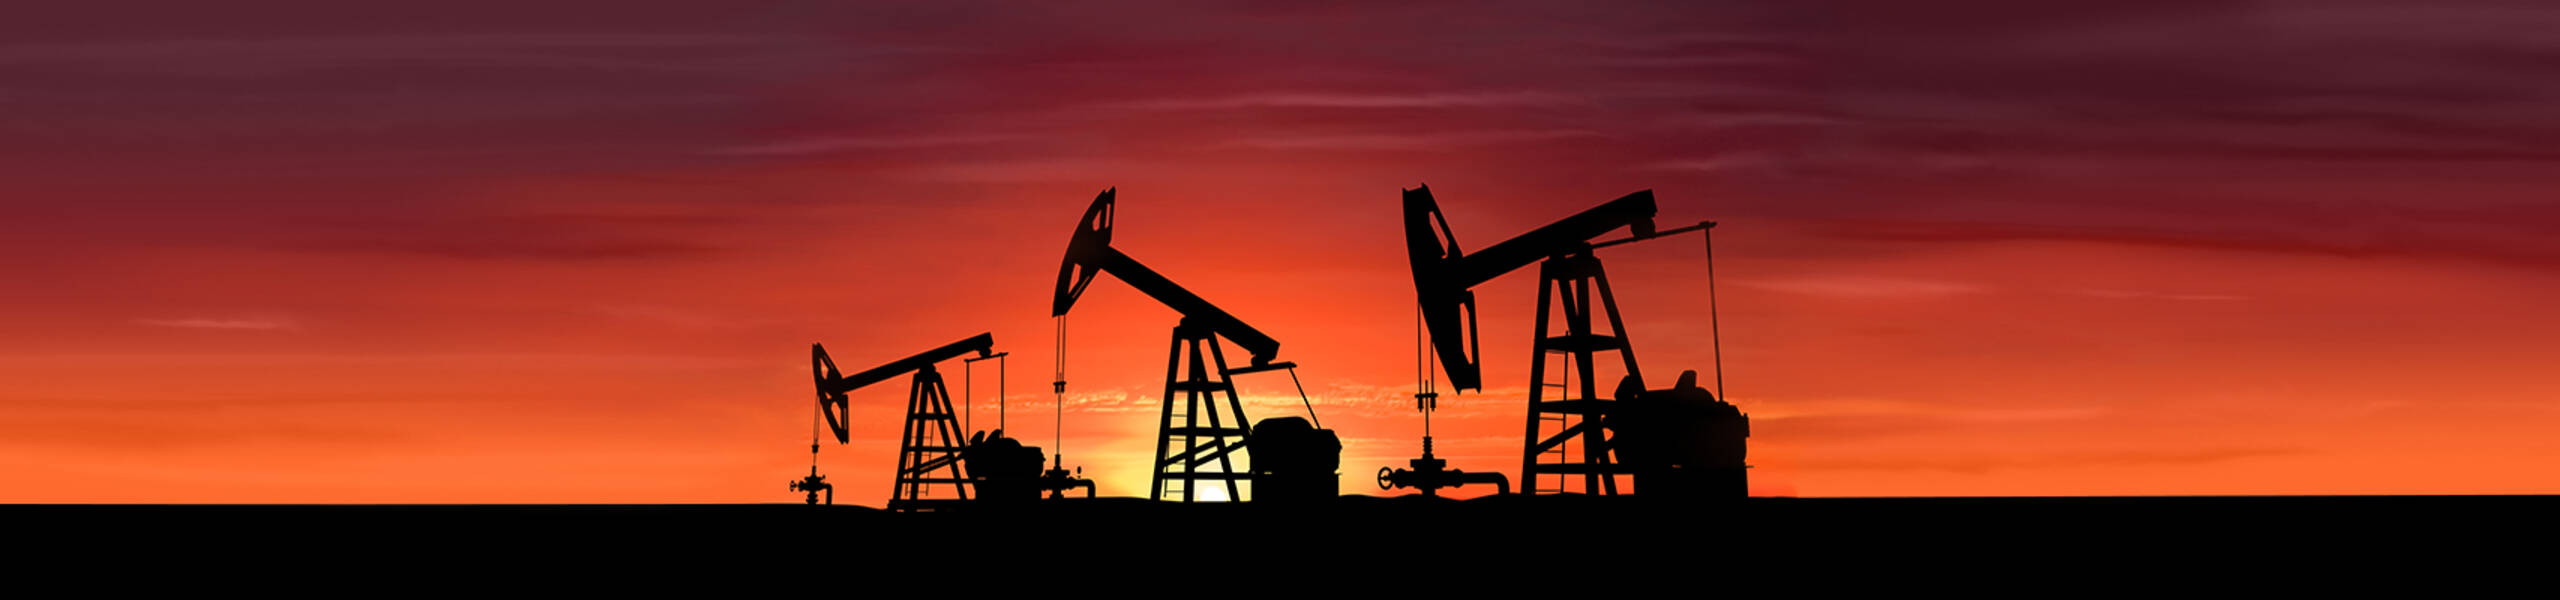 Oil market overview